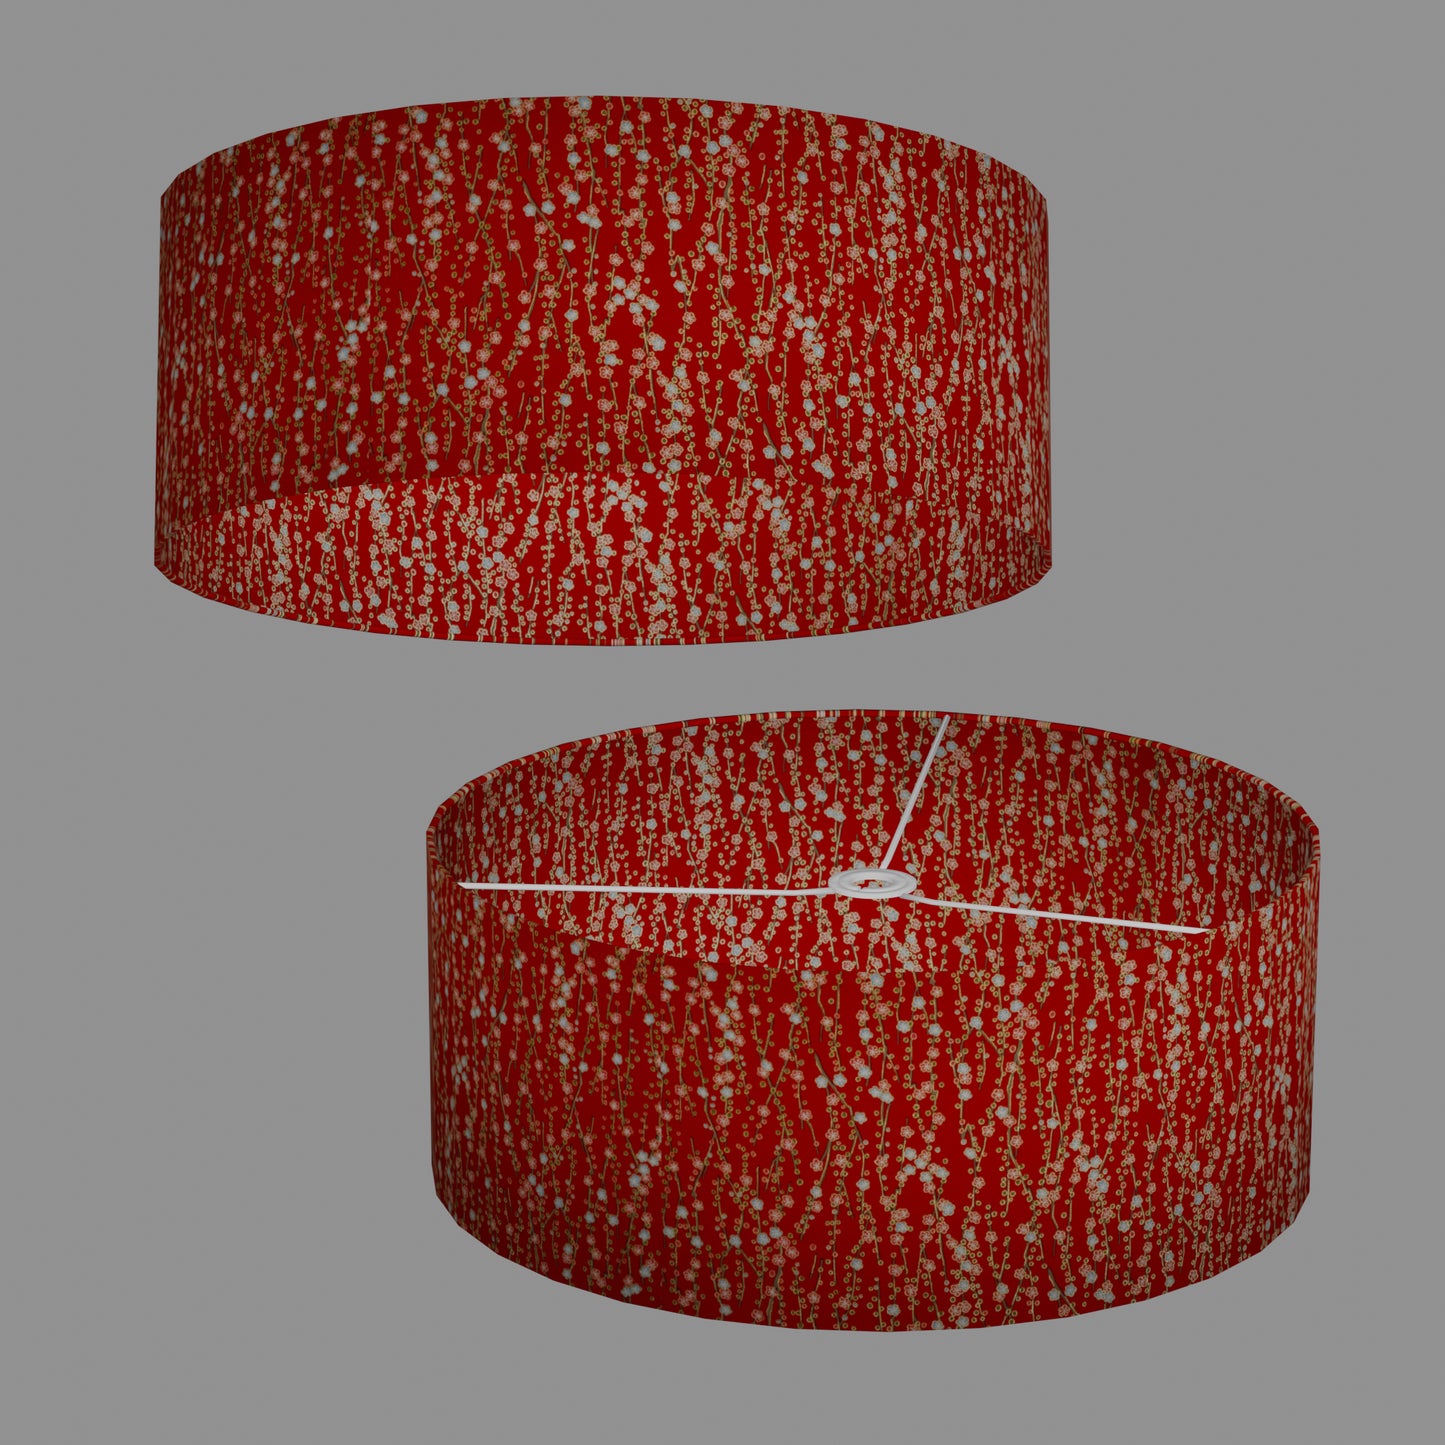 Drum Lamp Shade - W01 - Red Daisies, 50cm(d) x 20cm(h)